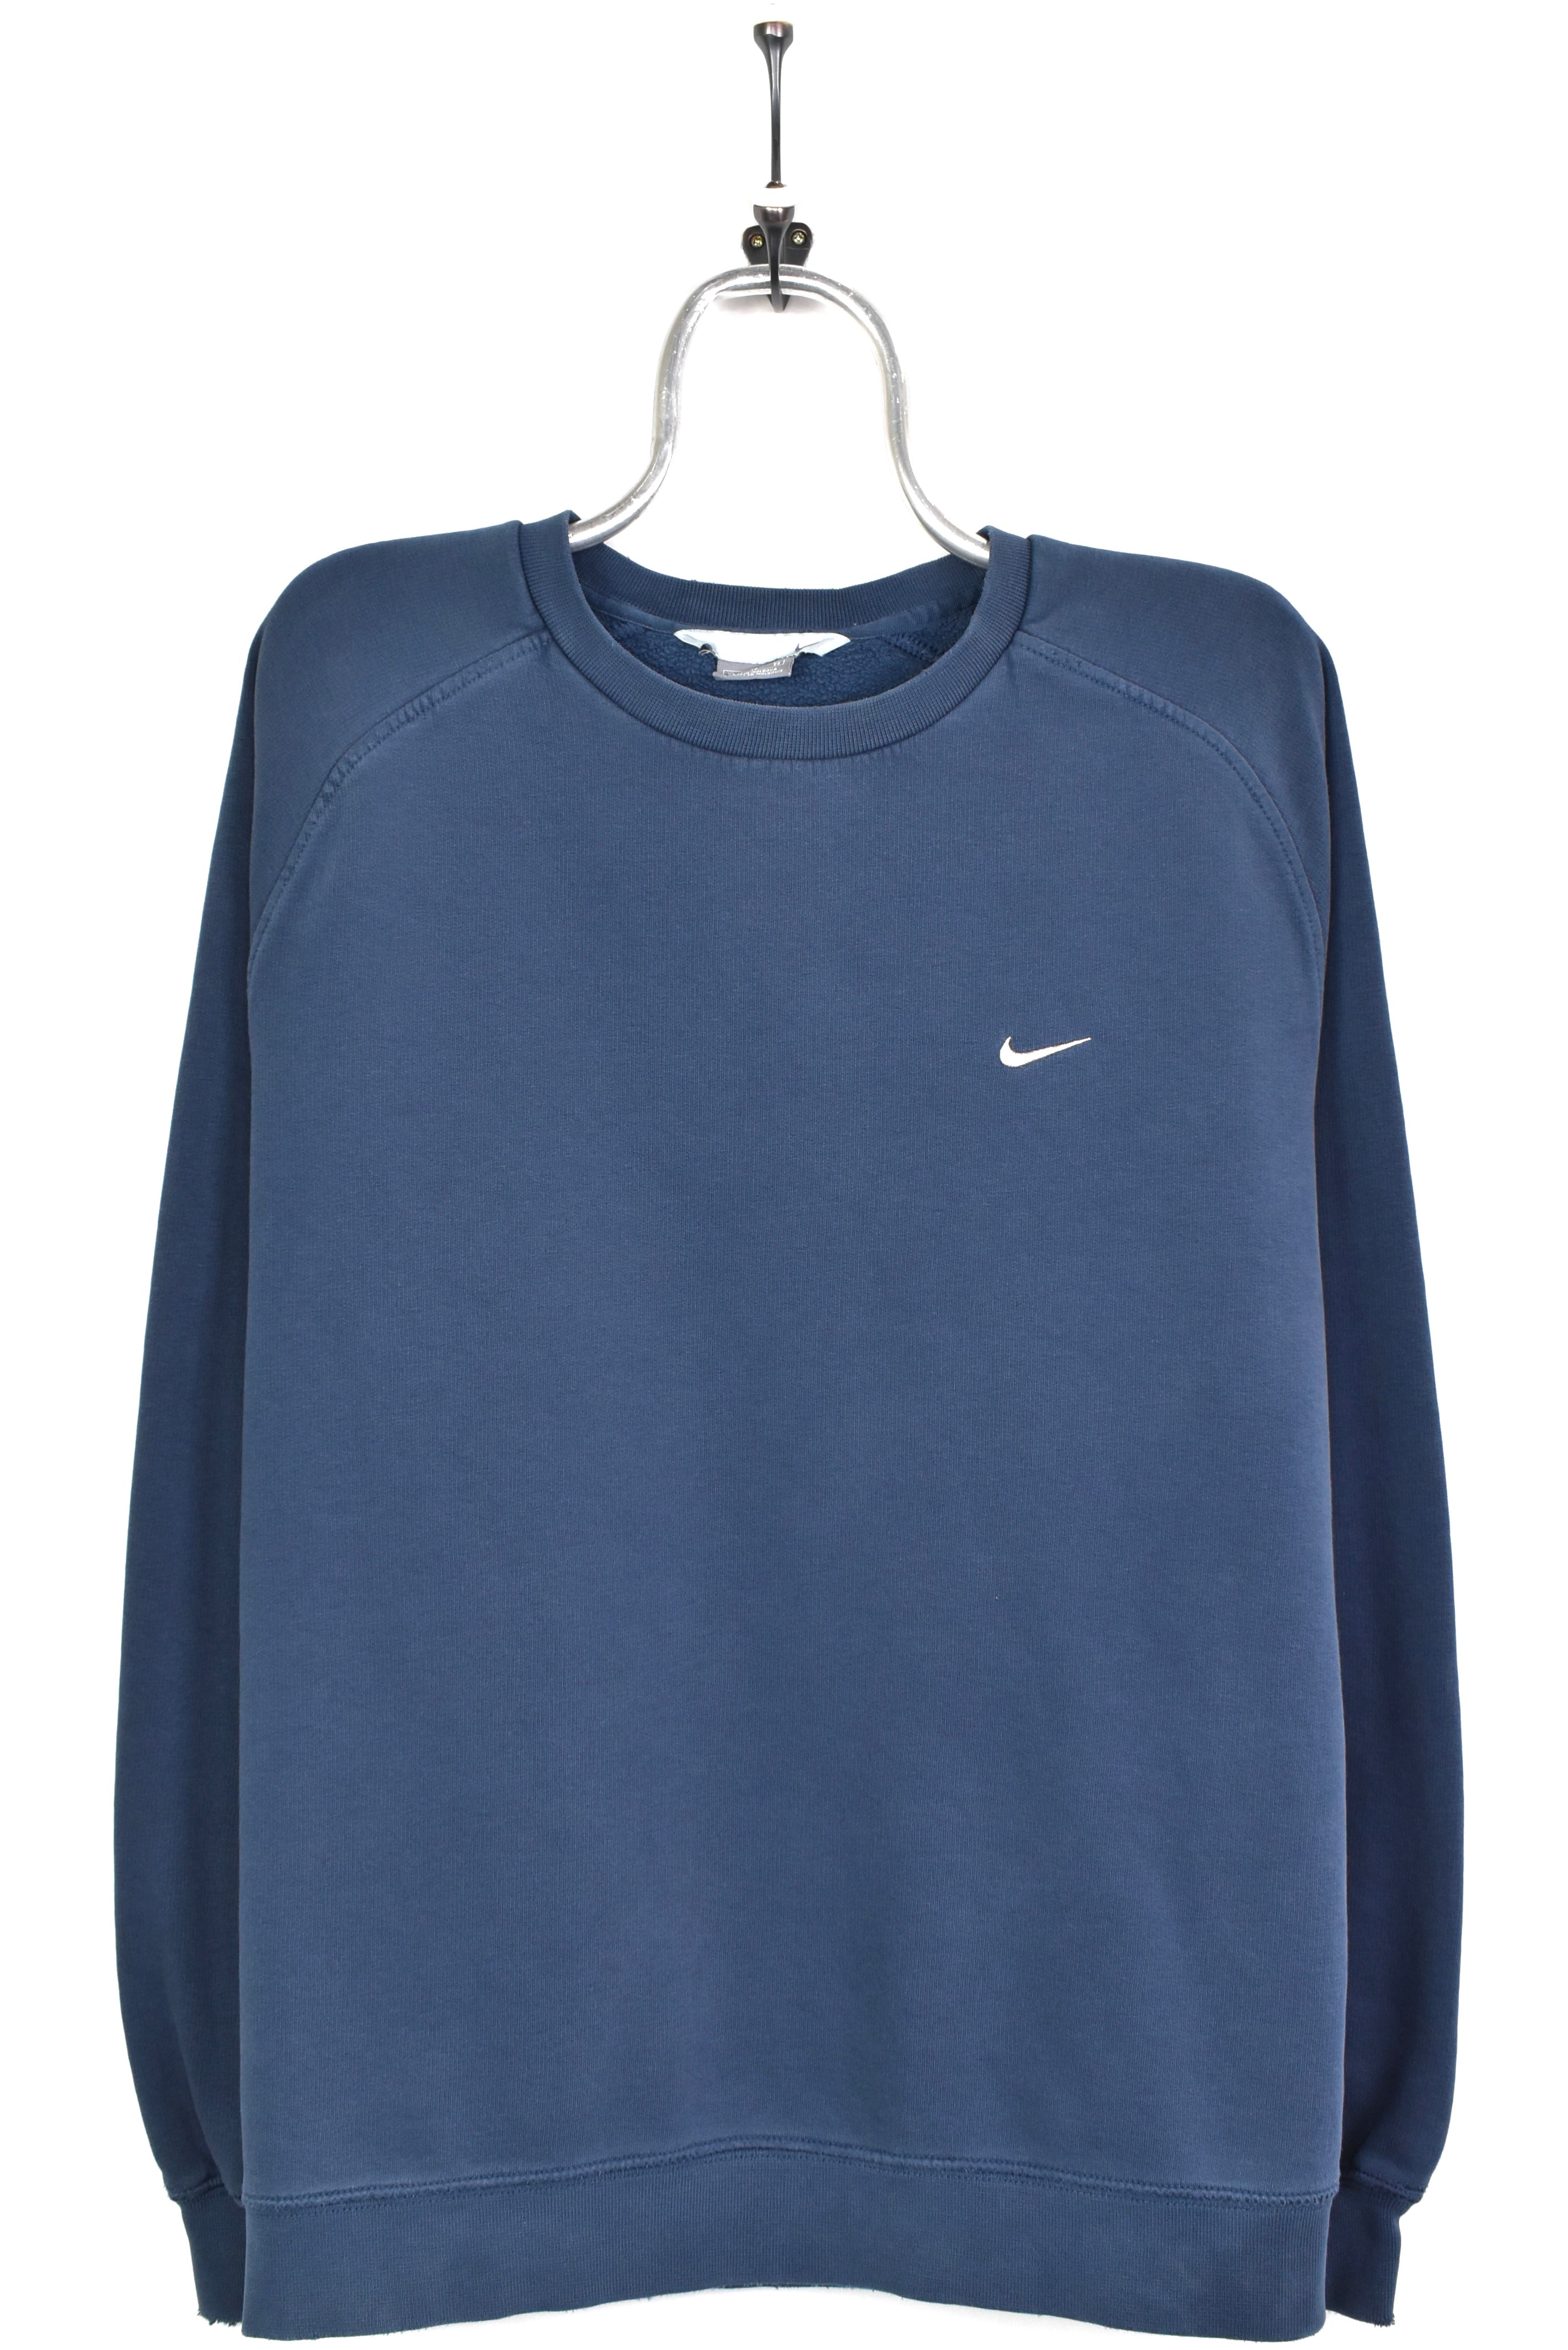 Vintage Nike embroidered navy sweatshirt | XL NIKE